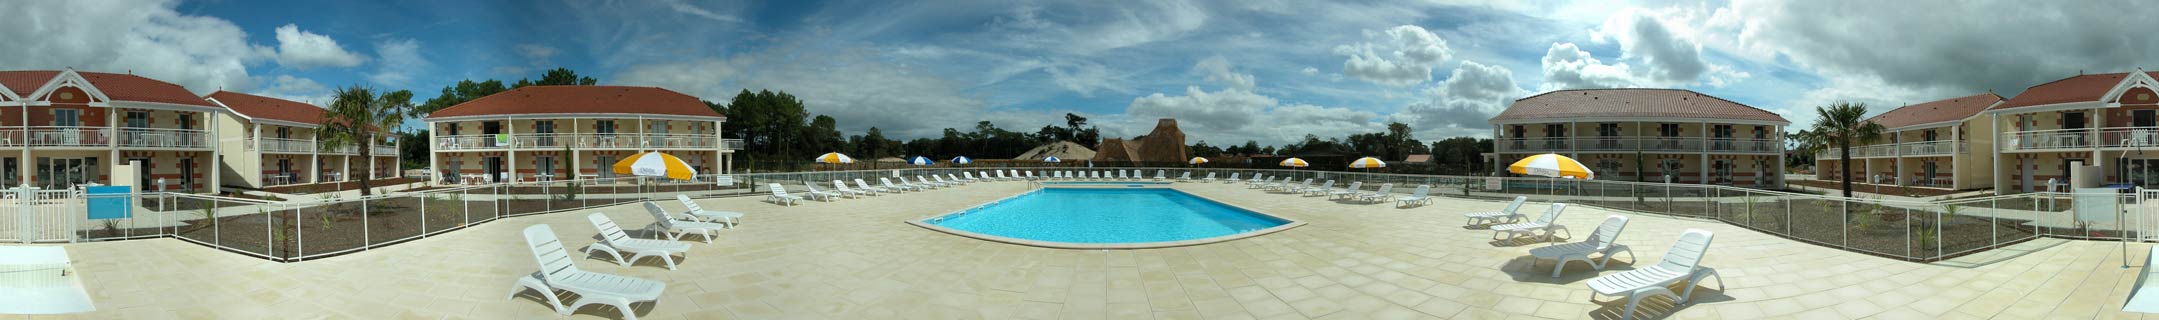 Le Verdon sur Mer - Les Vertmarines : Exterior view with swimming pool